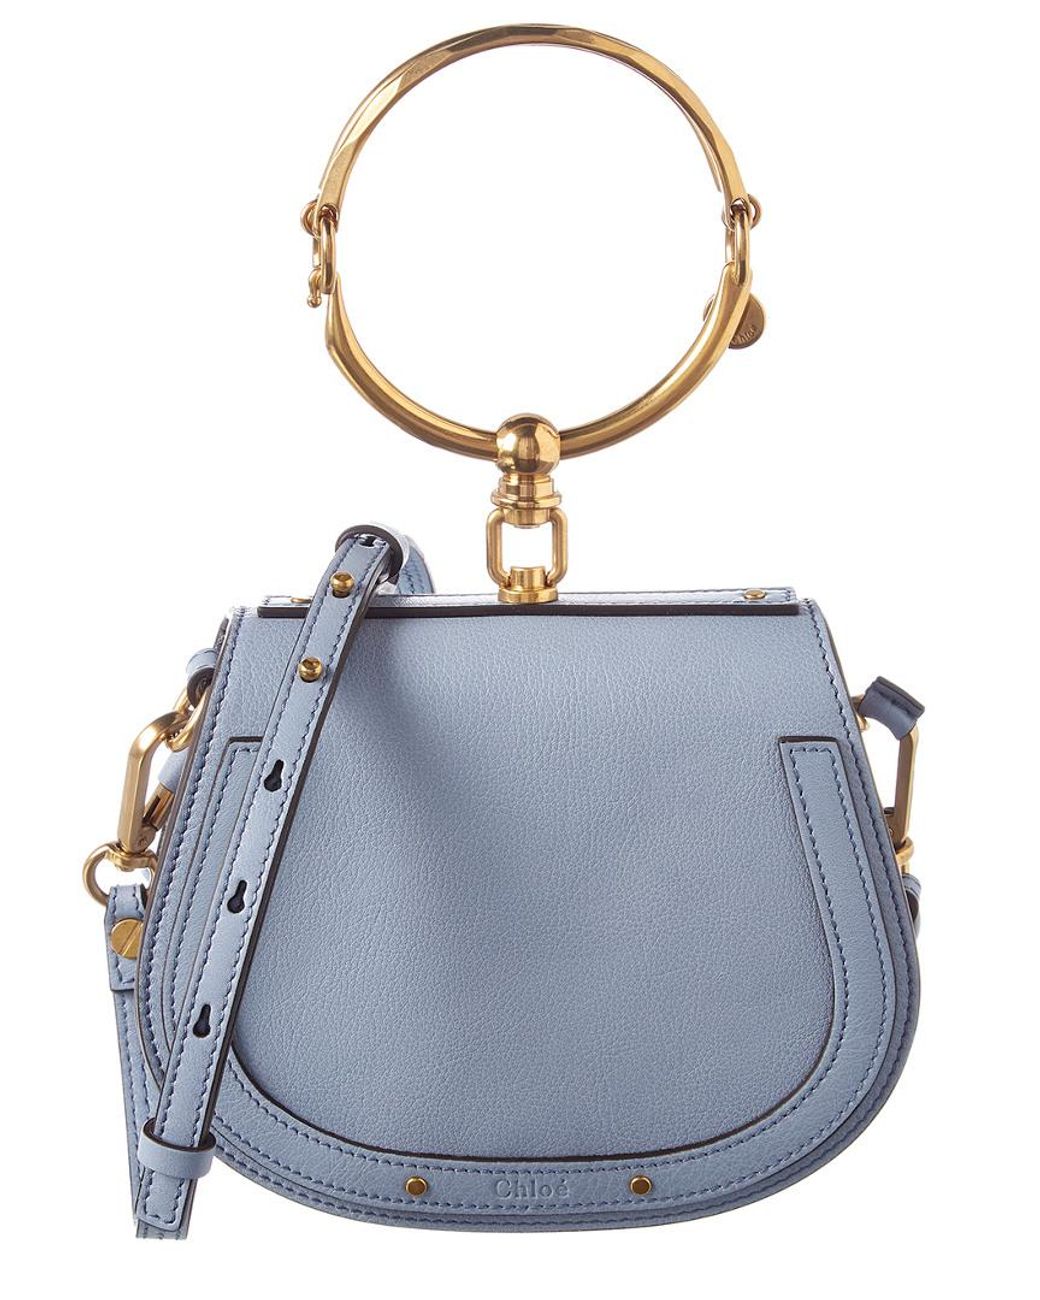 Chloé Nile Small Leather Bracelet Bag in Blue